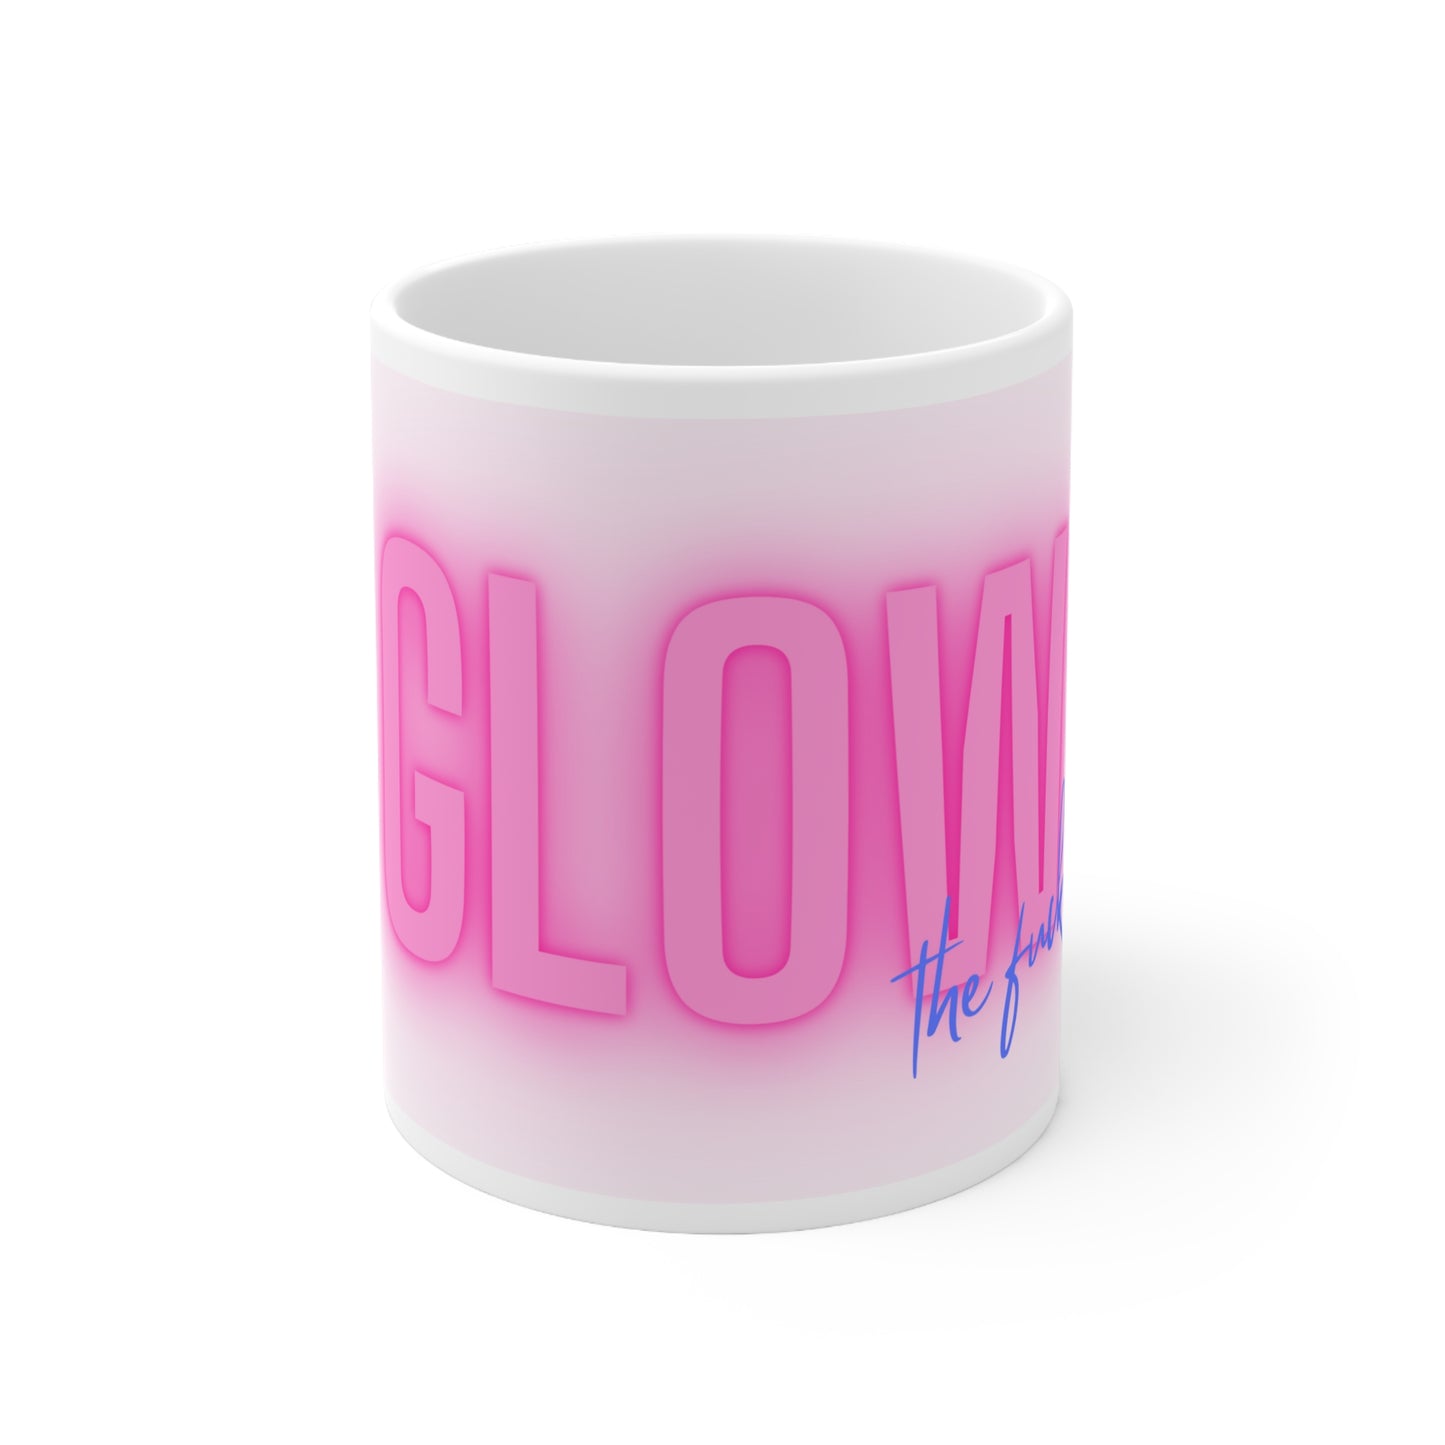 GLOW the f*ck up  - 11oz Ceramic Mug